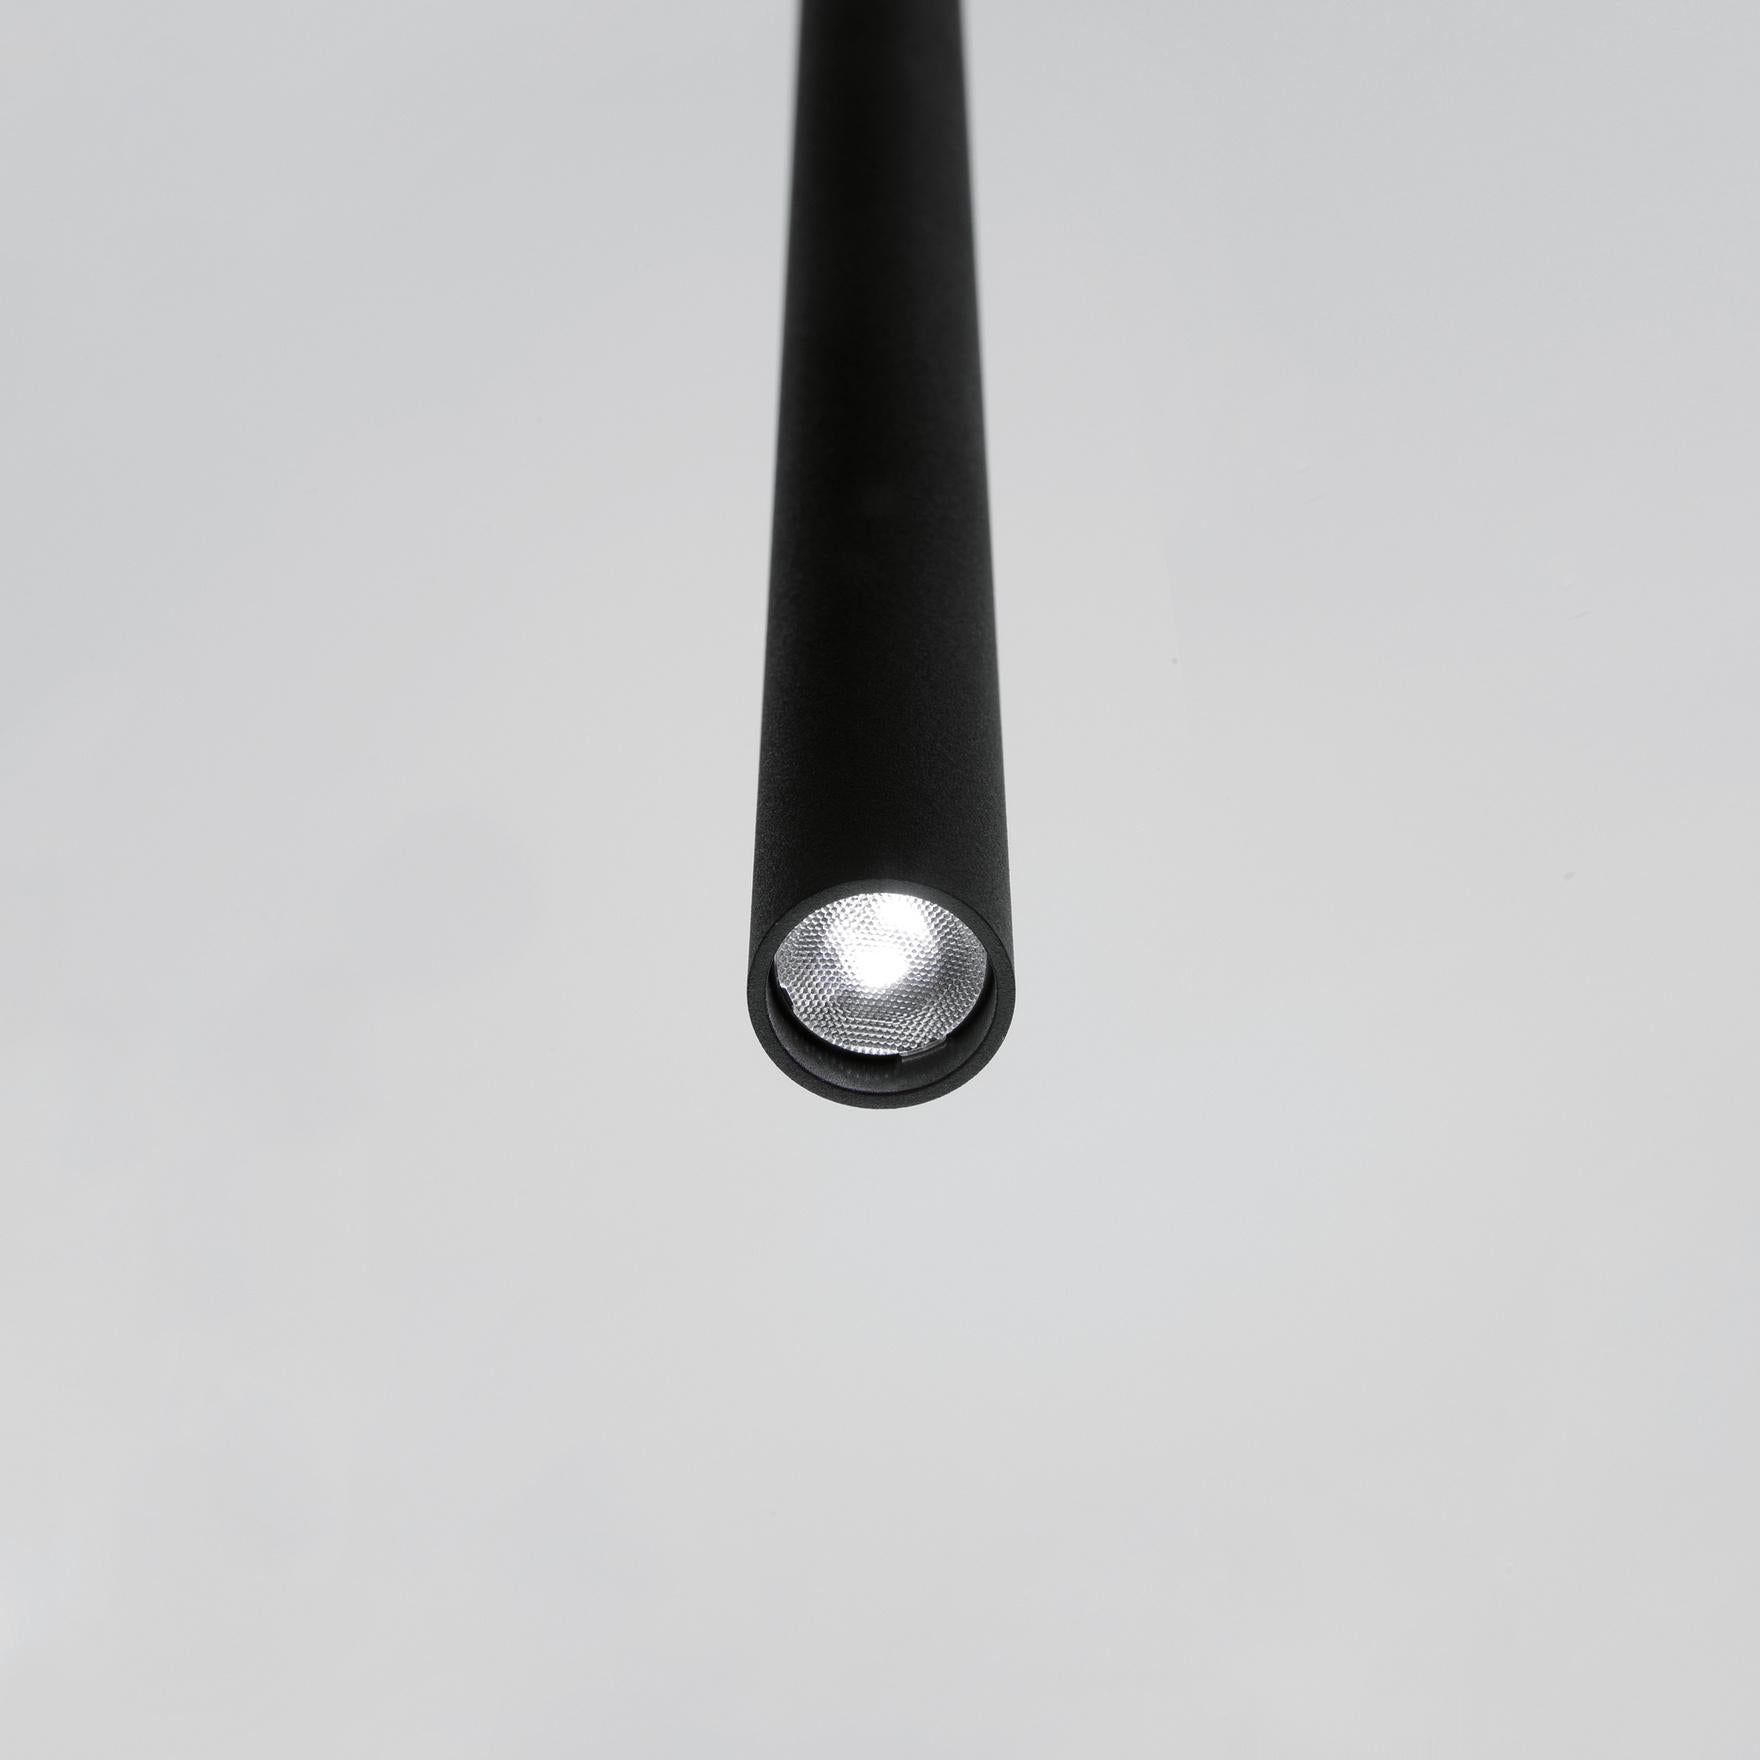 Davide Groppi MISS pendant lamp 1-10V in Matt black by Omar Carraglia  For Sale 5